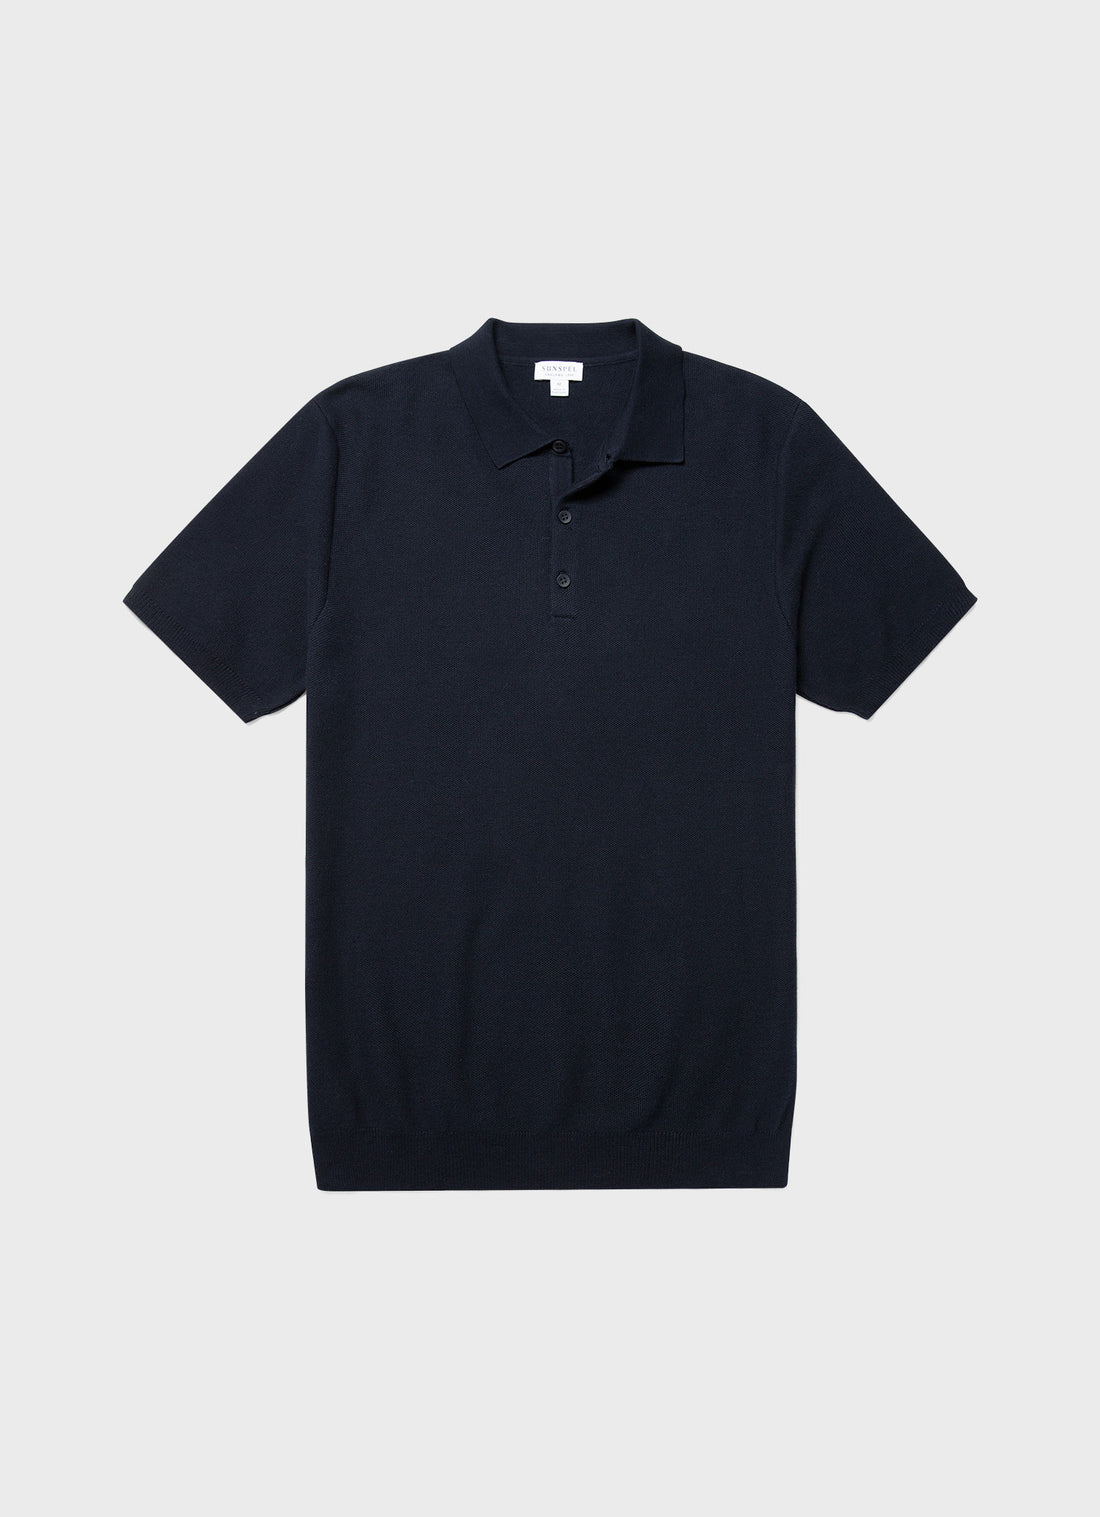 Men's Cotton Piqué Polo Shirt in Sunspel